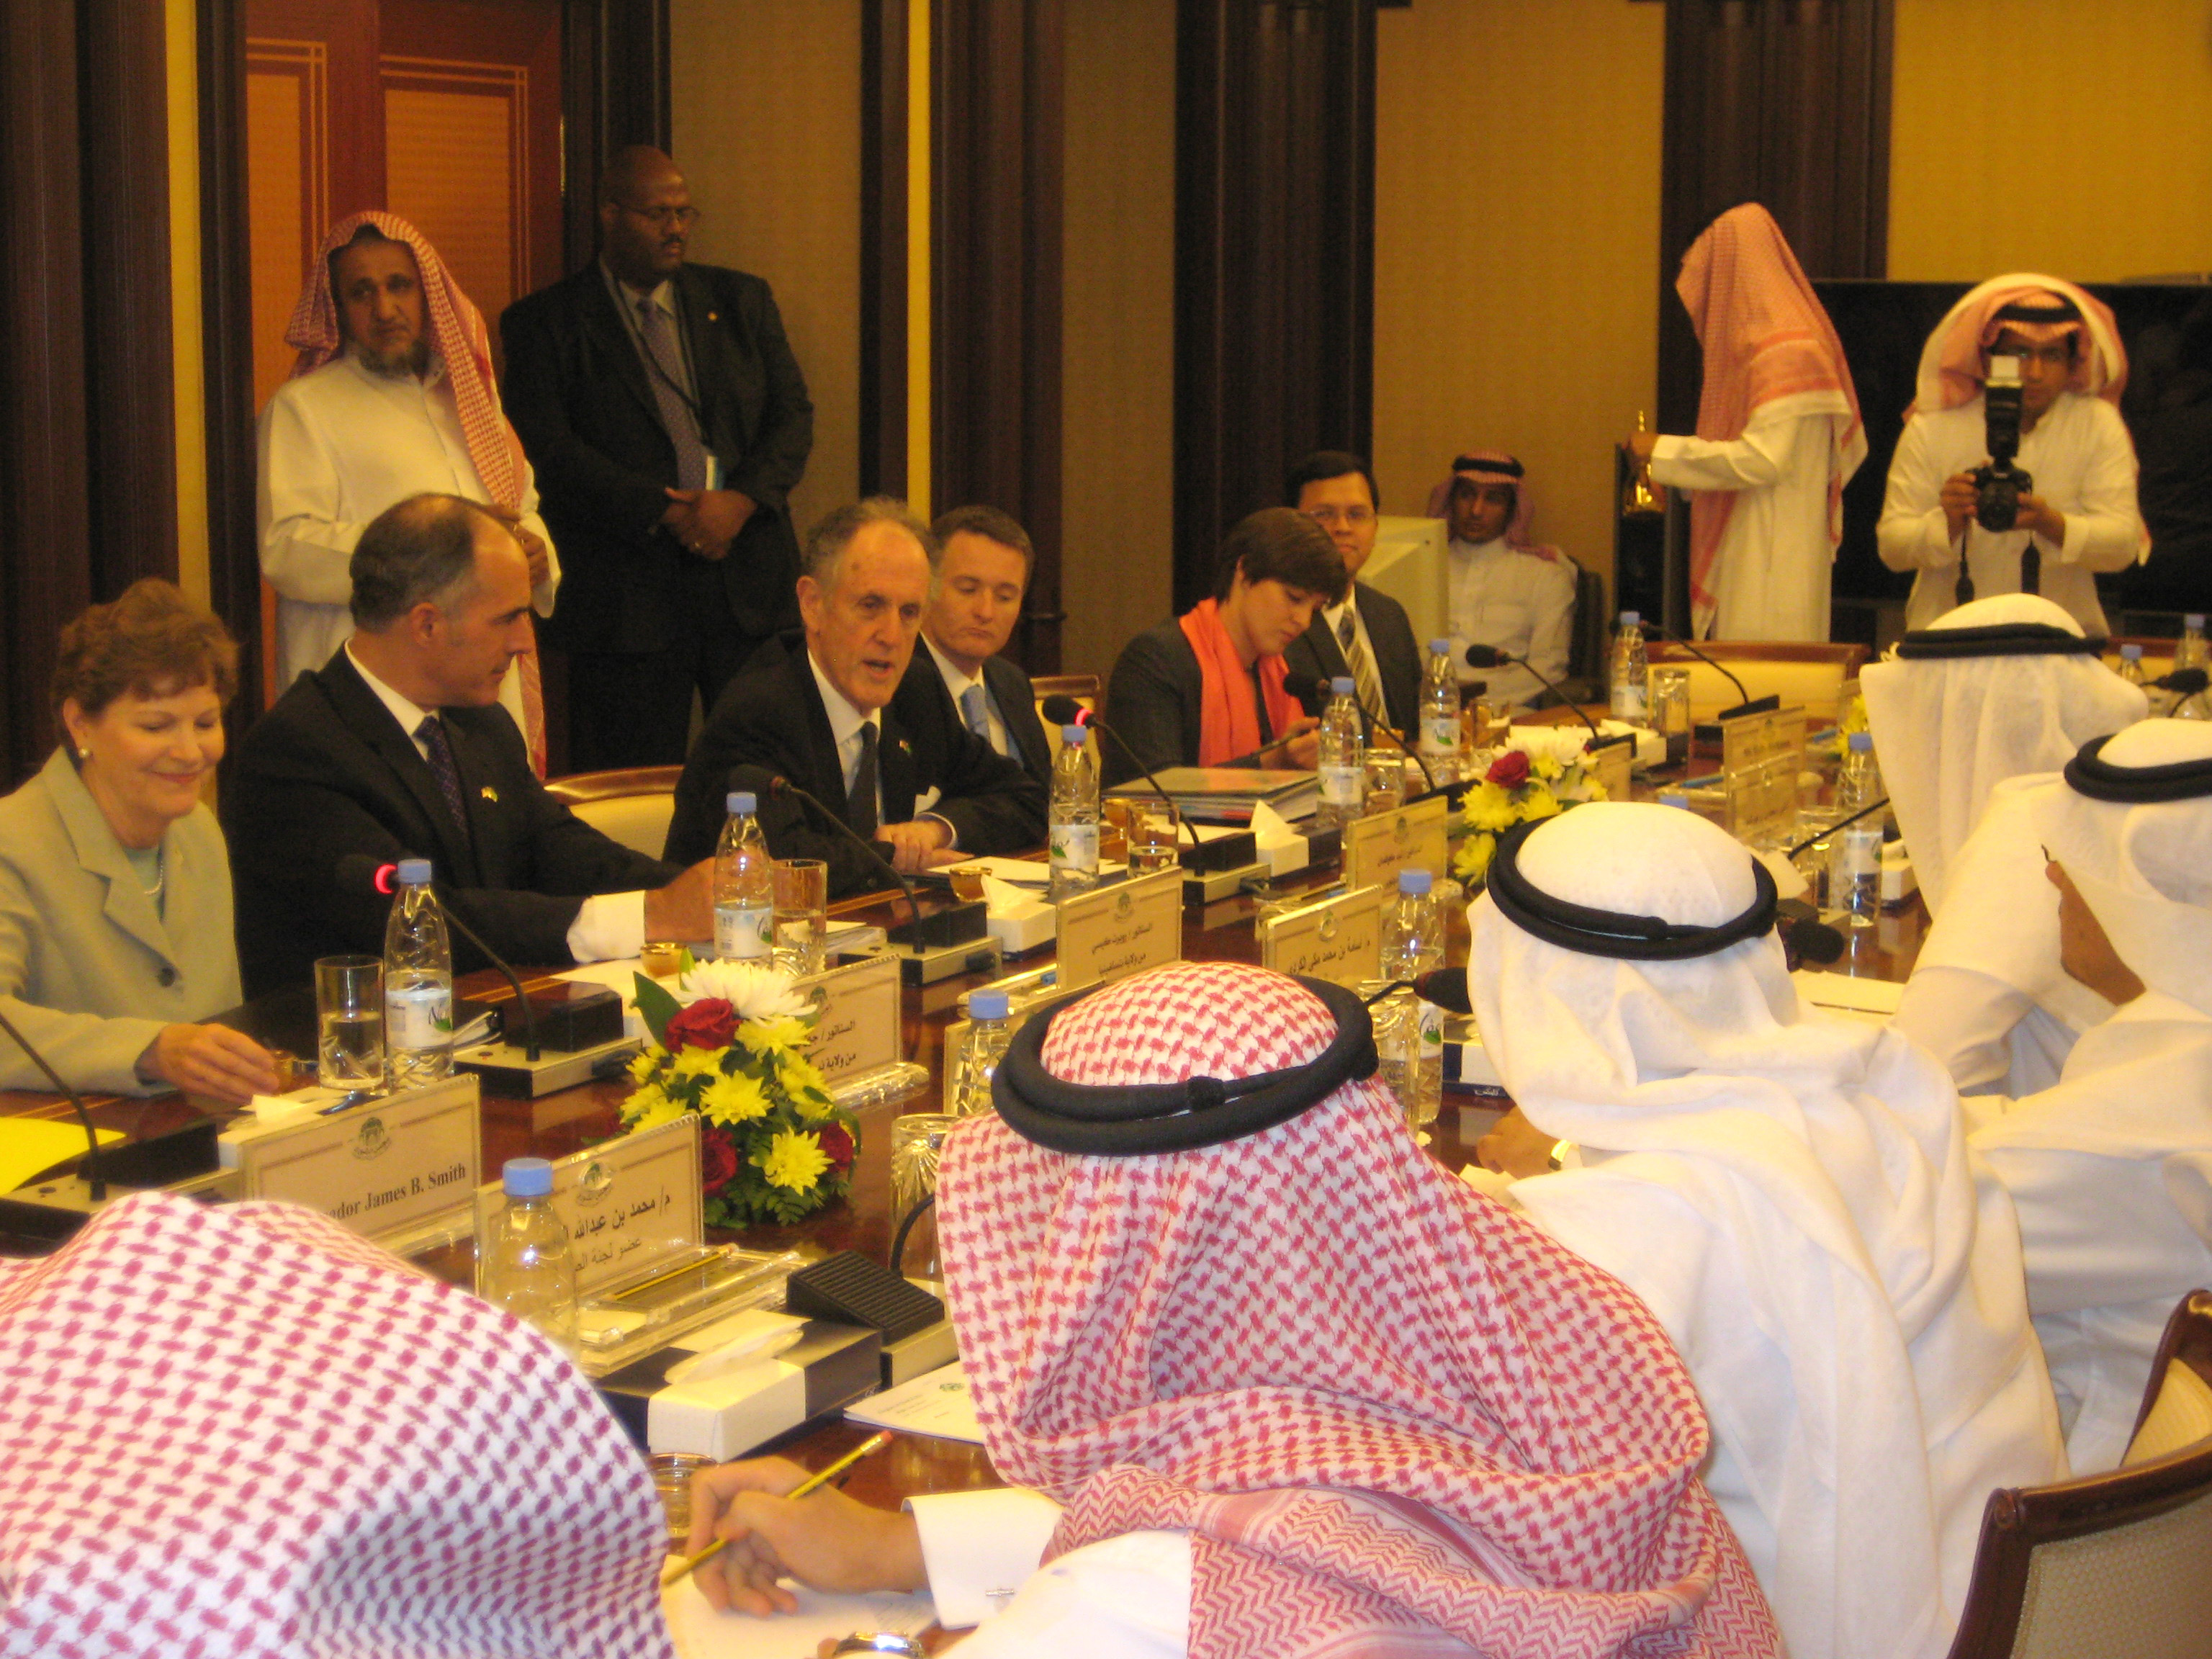 Photograph with the Majlis ash-Shura in Saudi Arabia, 2010 July